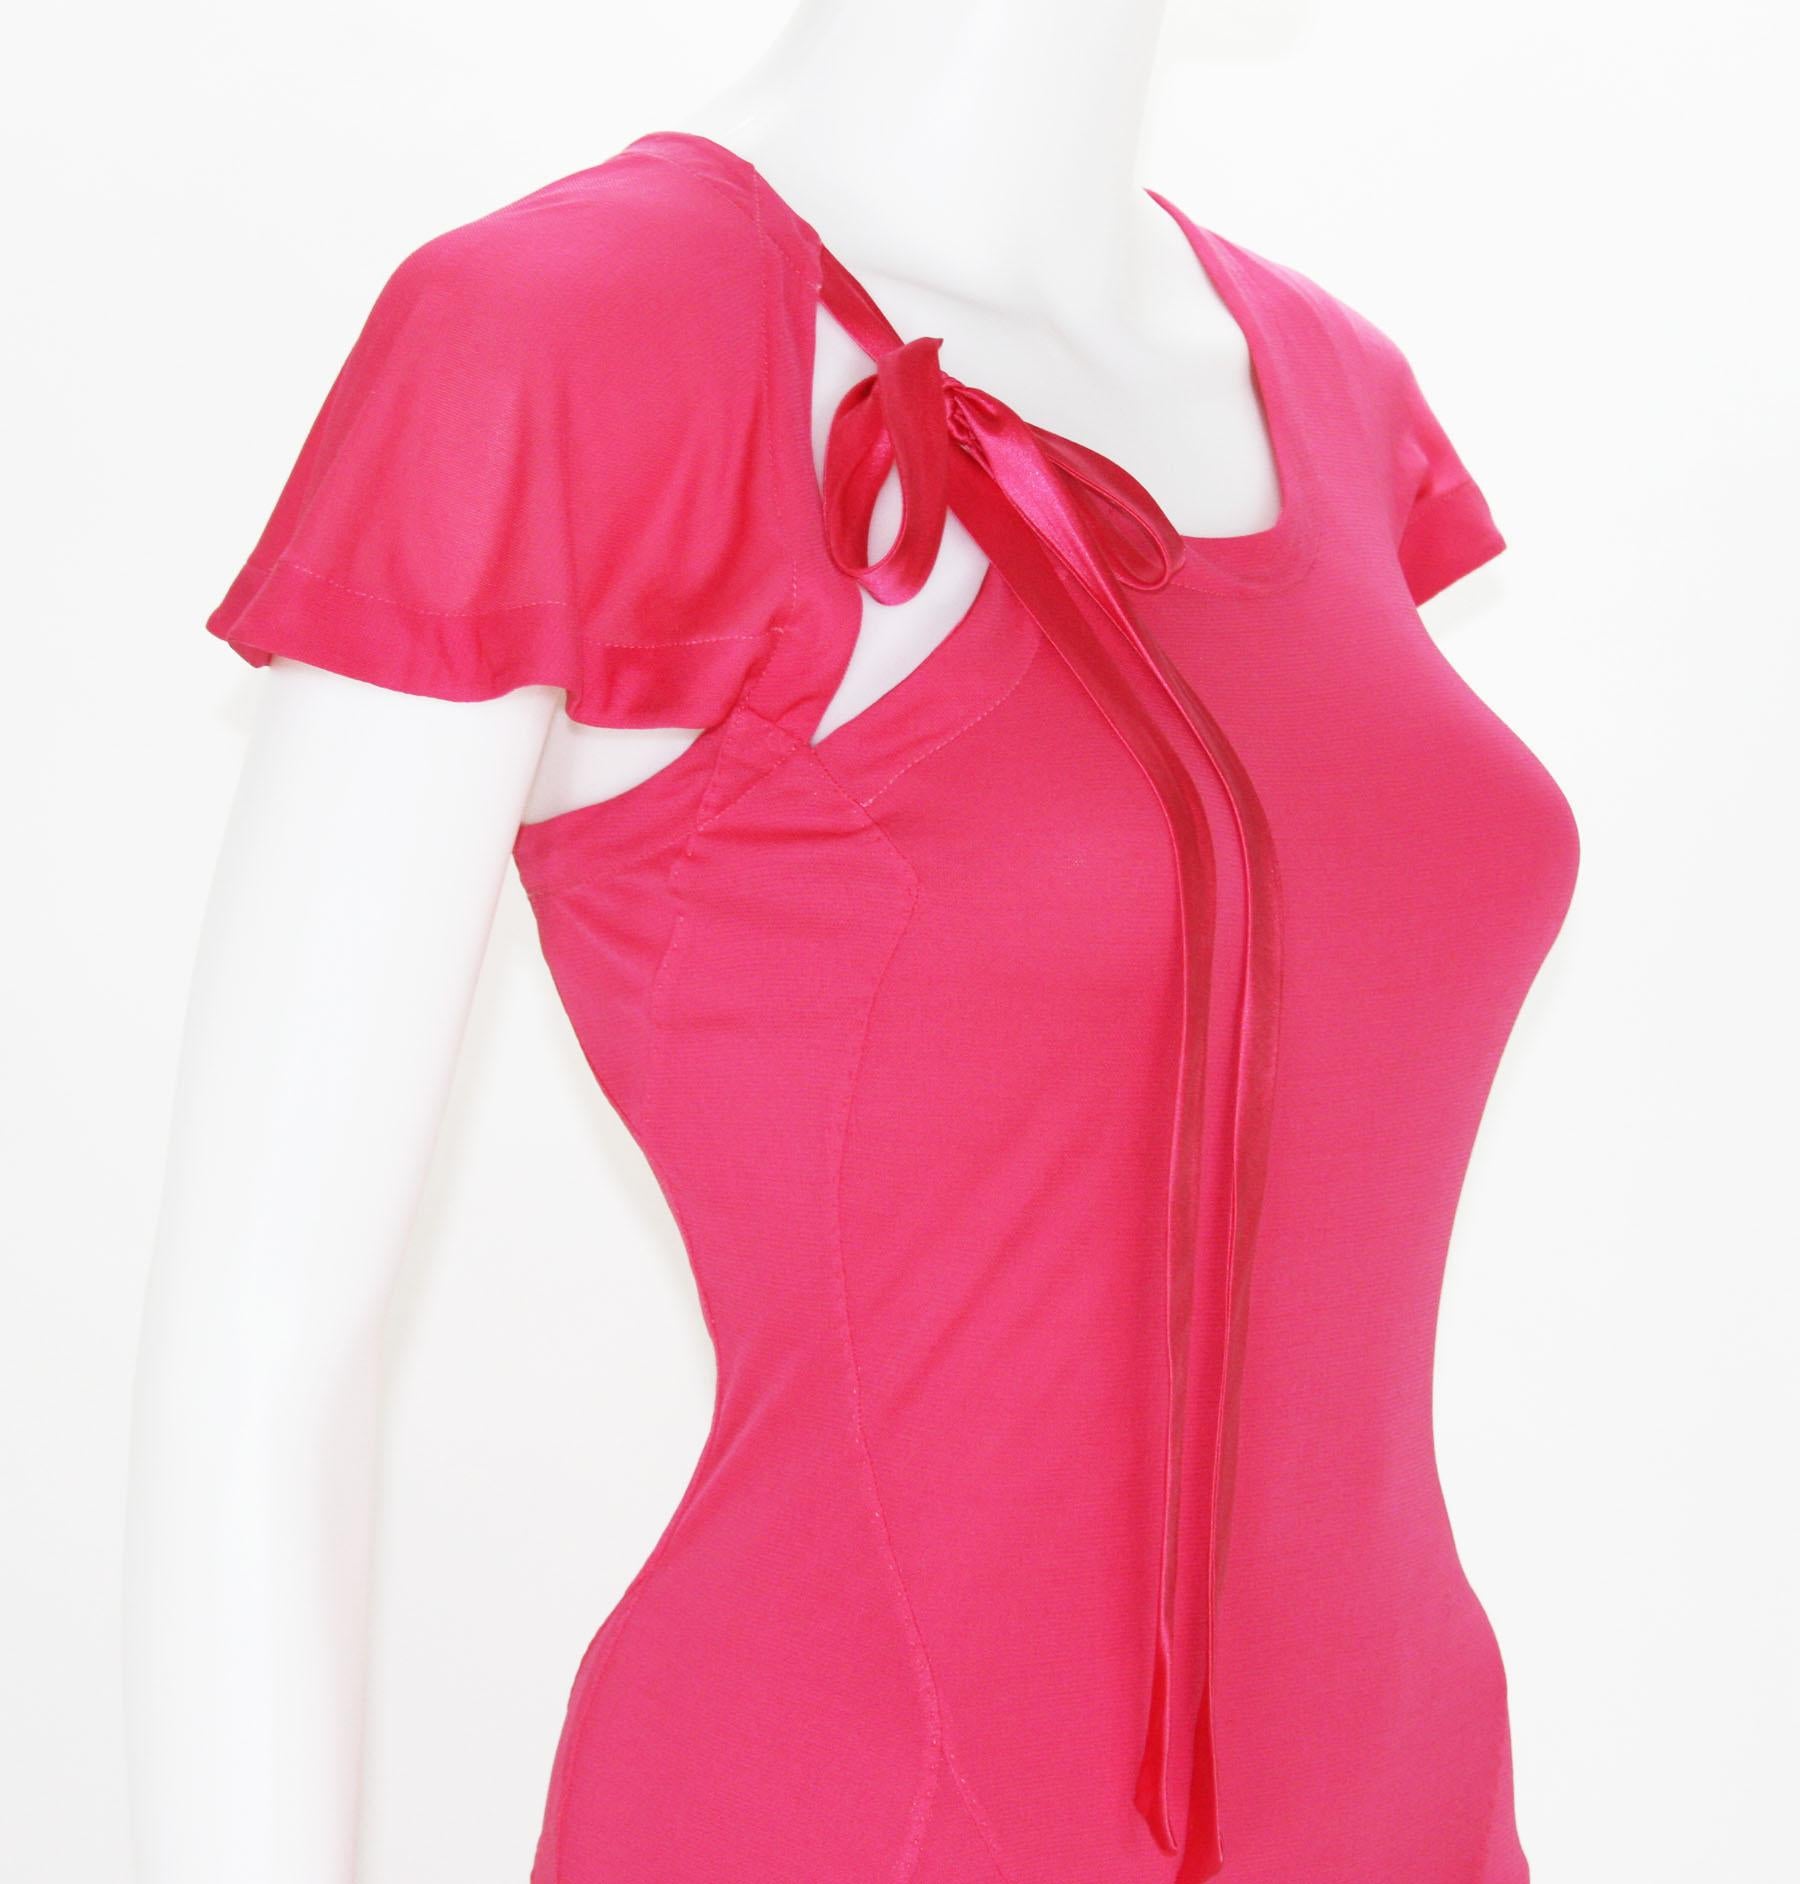 ysl rose jersey dress